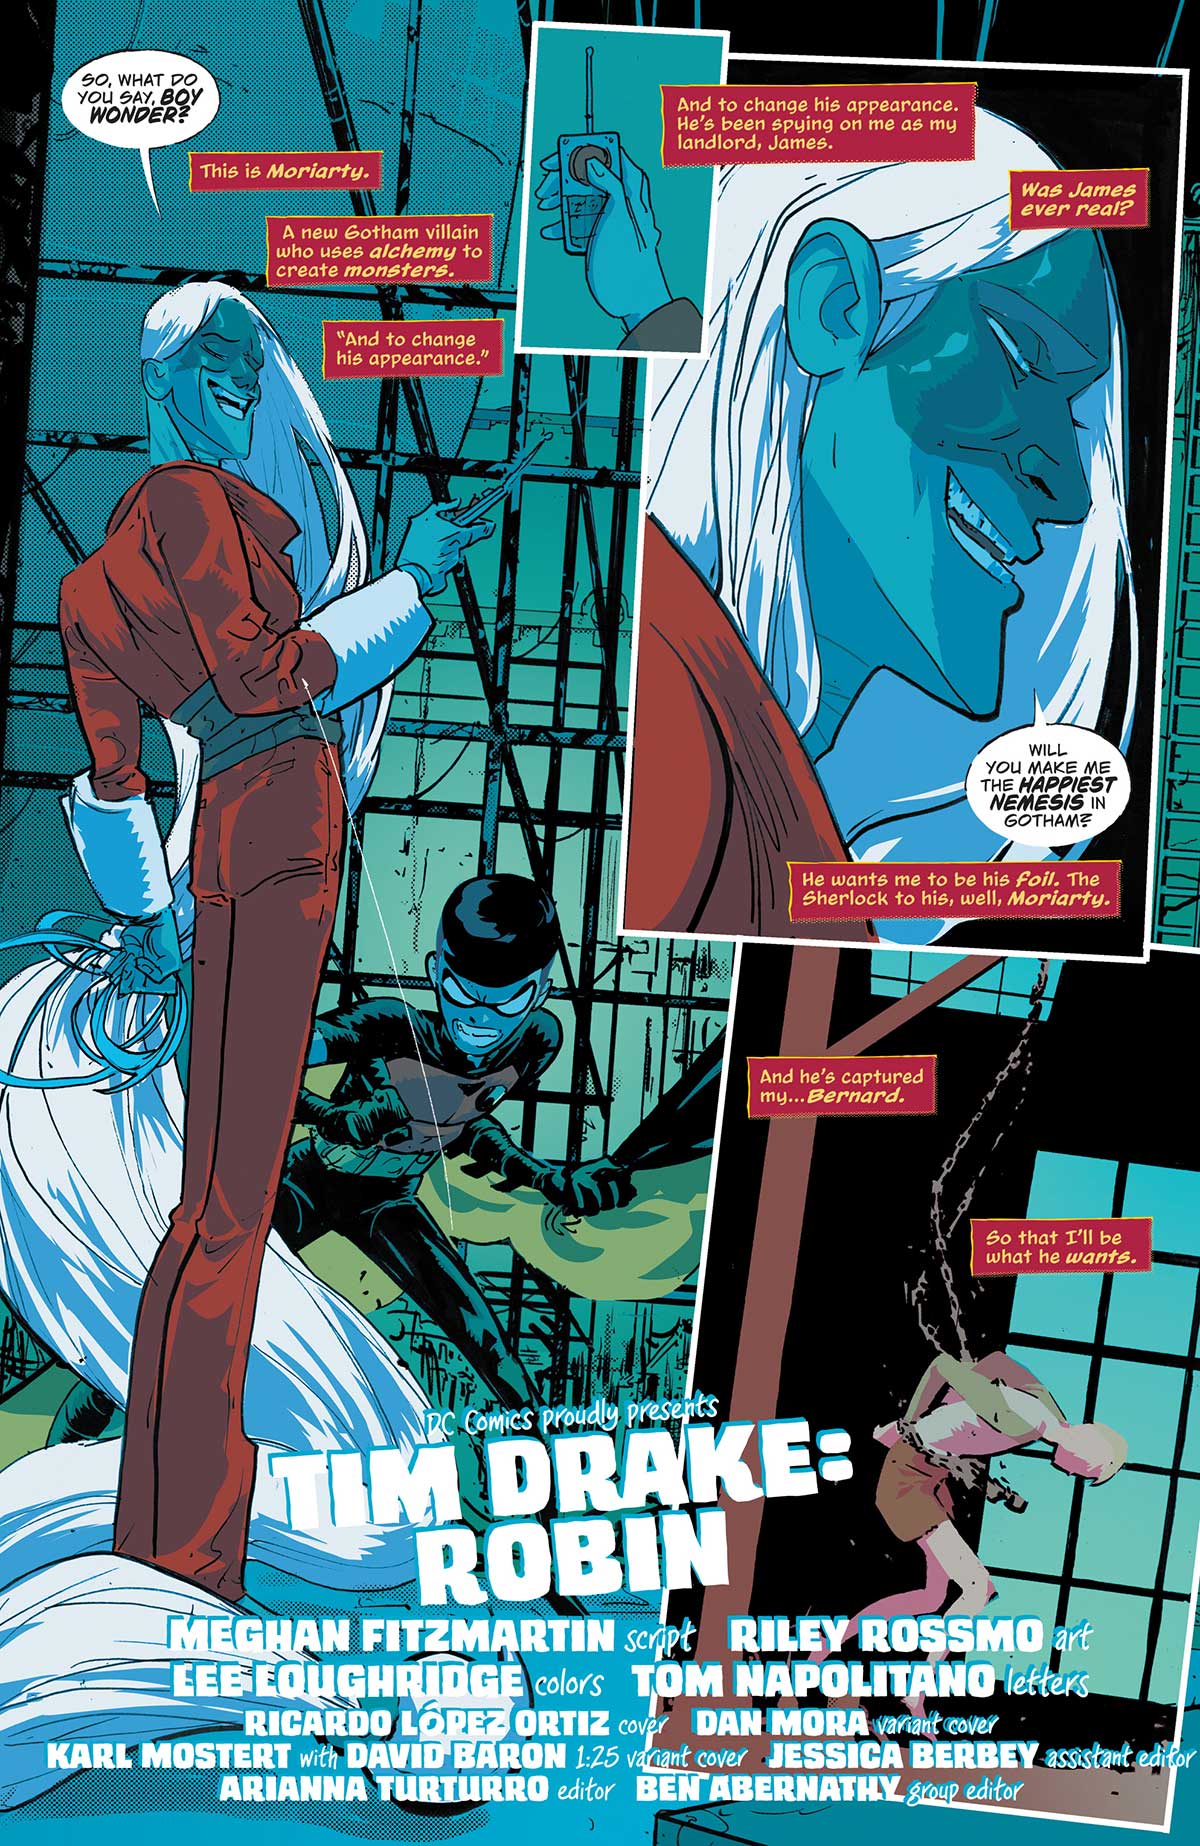 Tim Drake: Robin #7 review